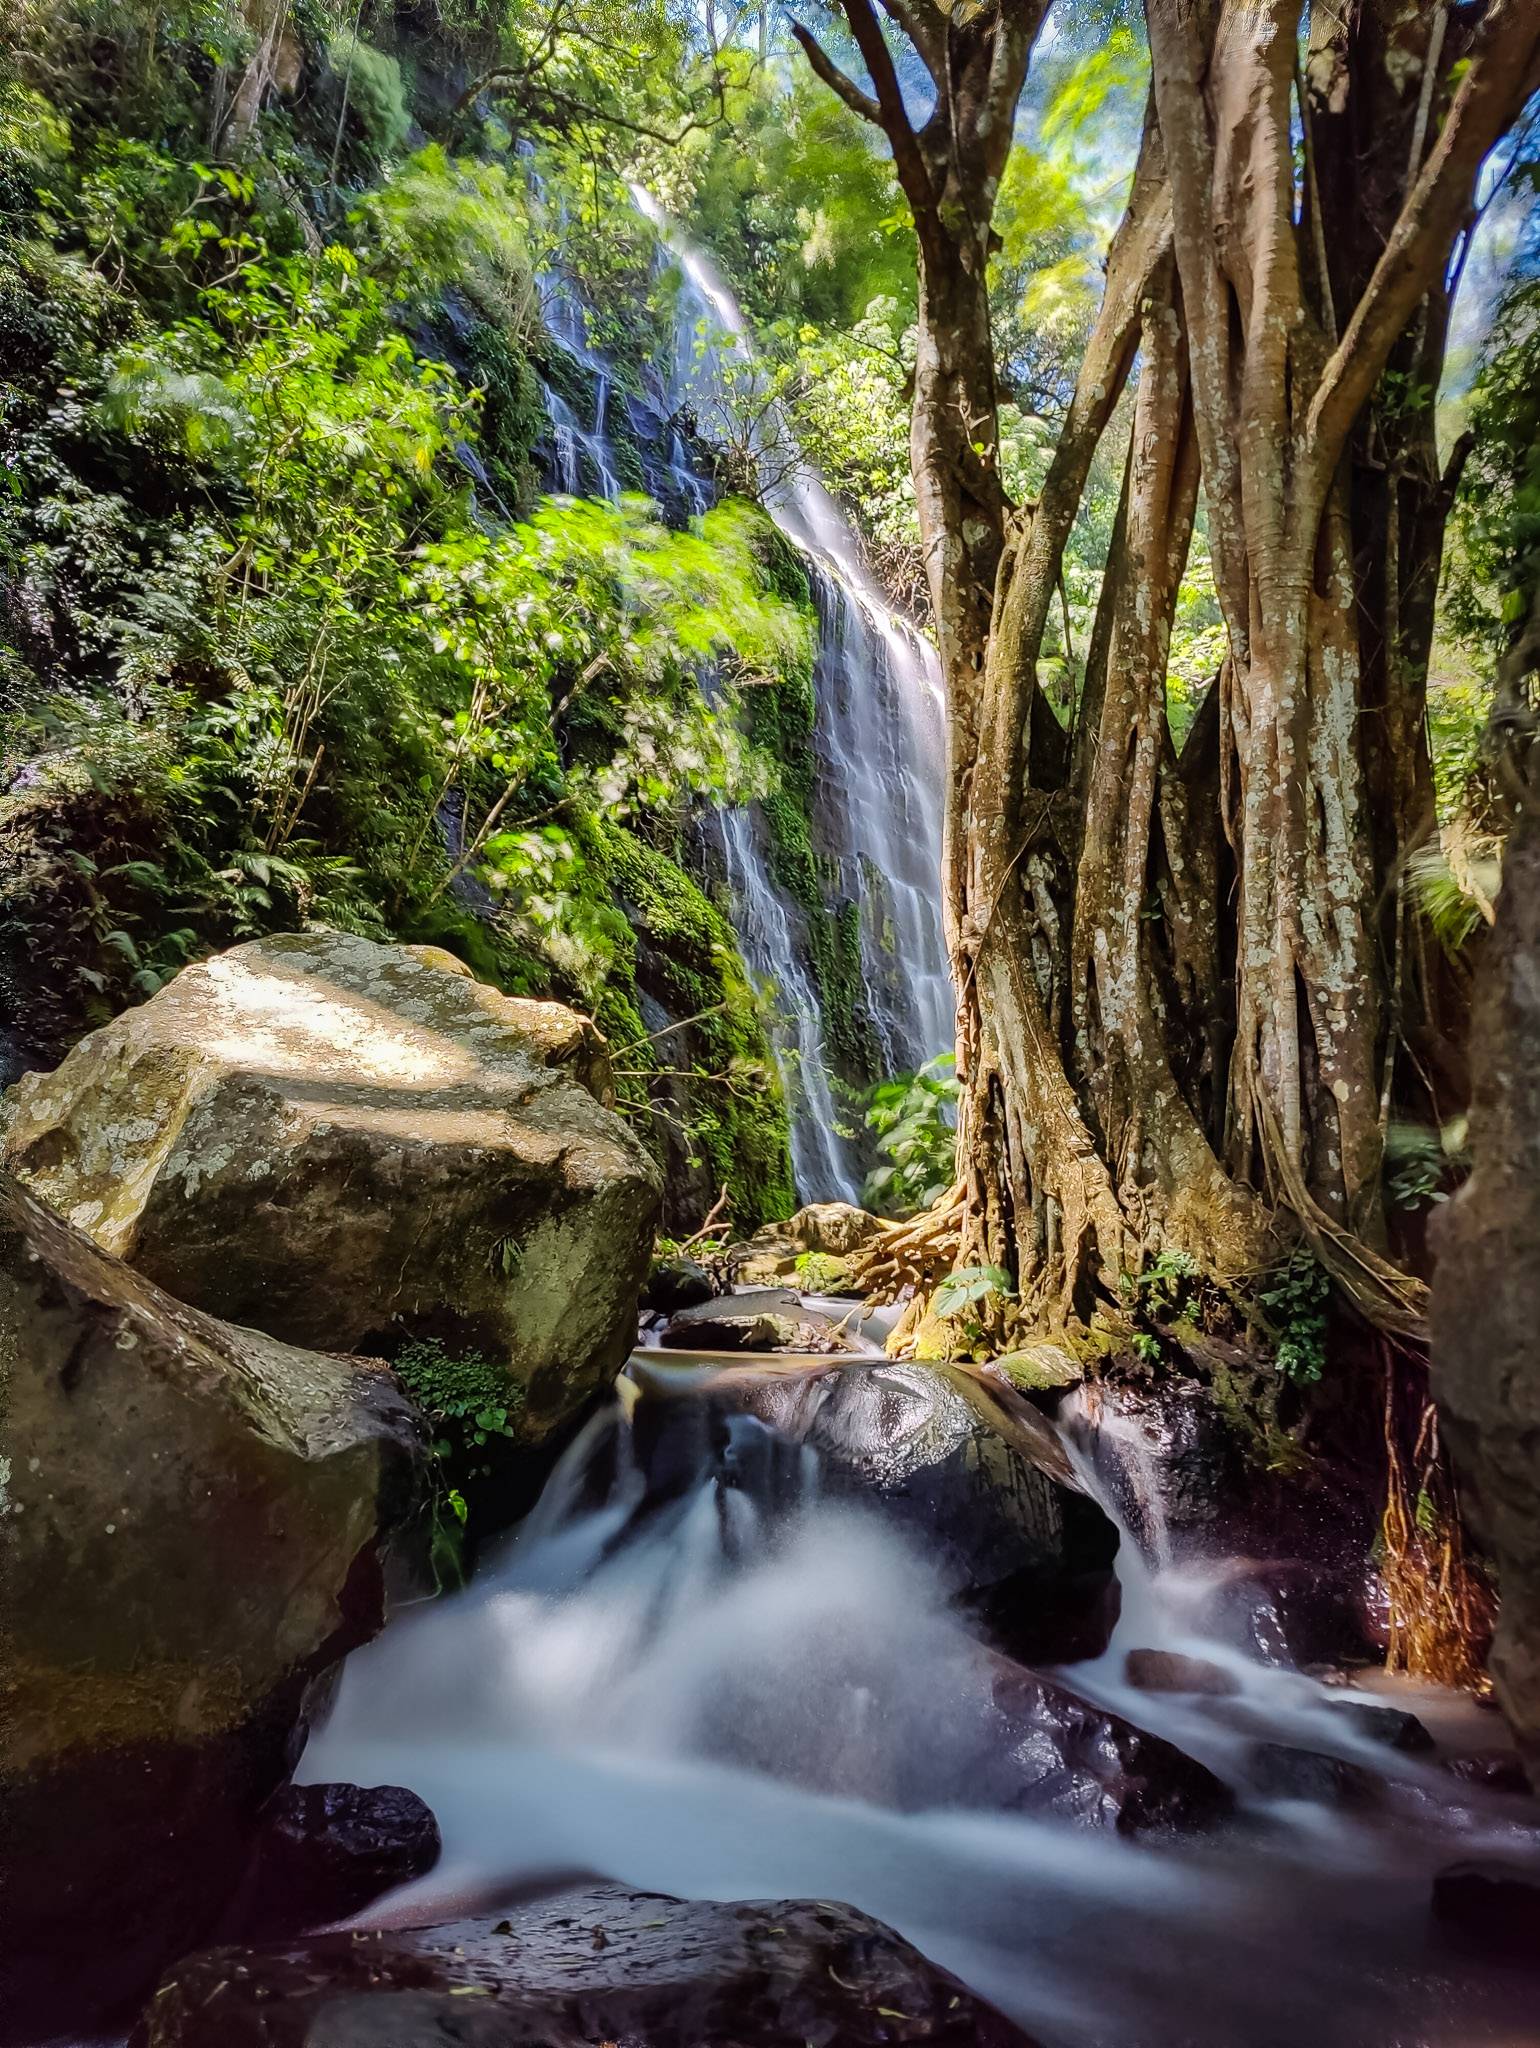 One of the "seven waterfalls", Juayua